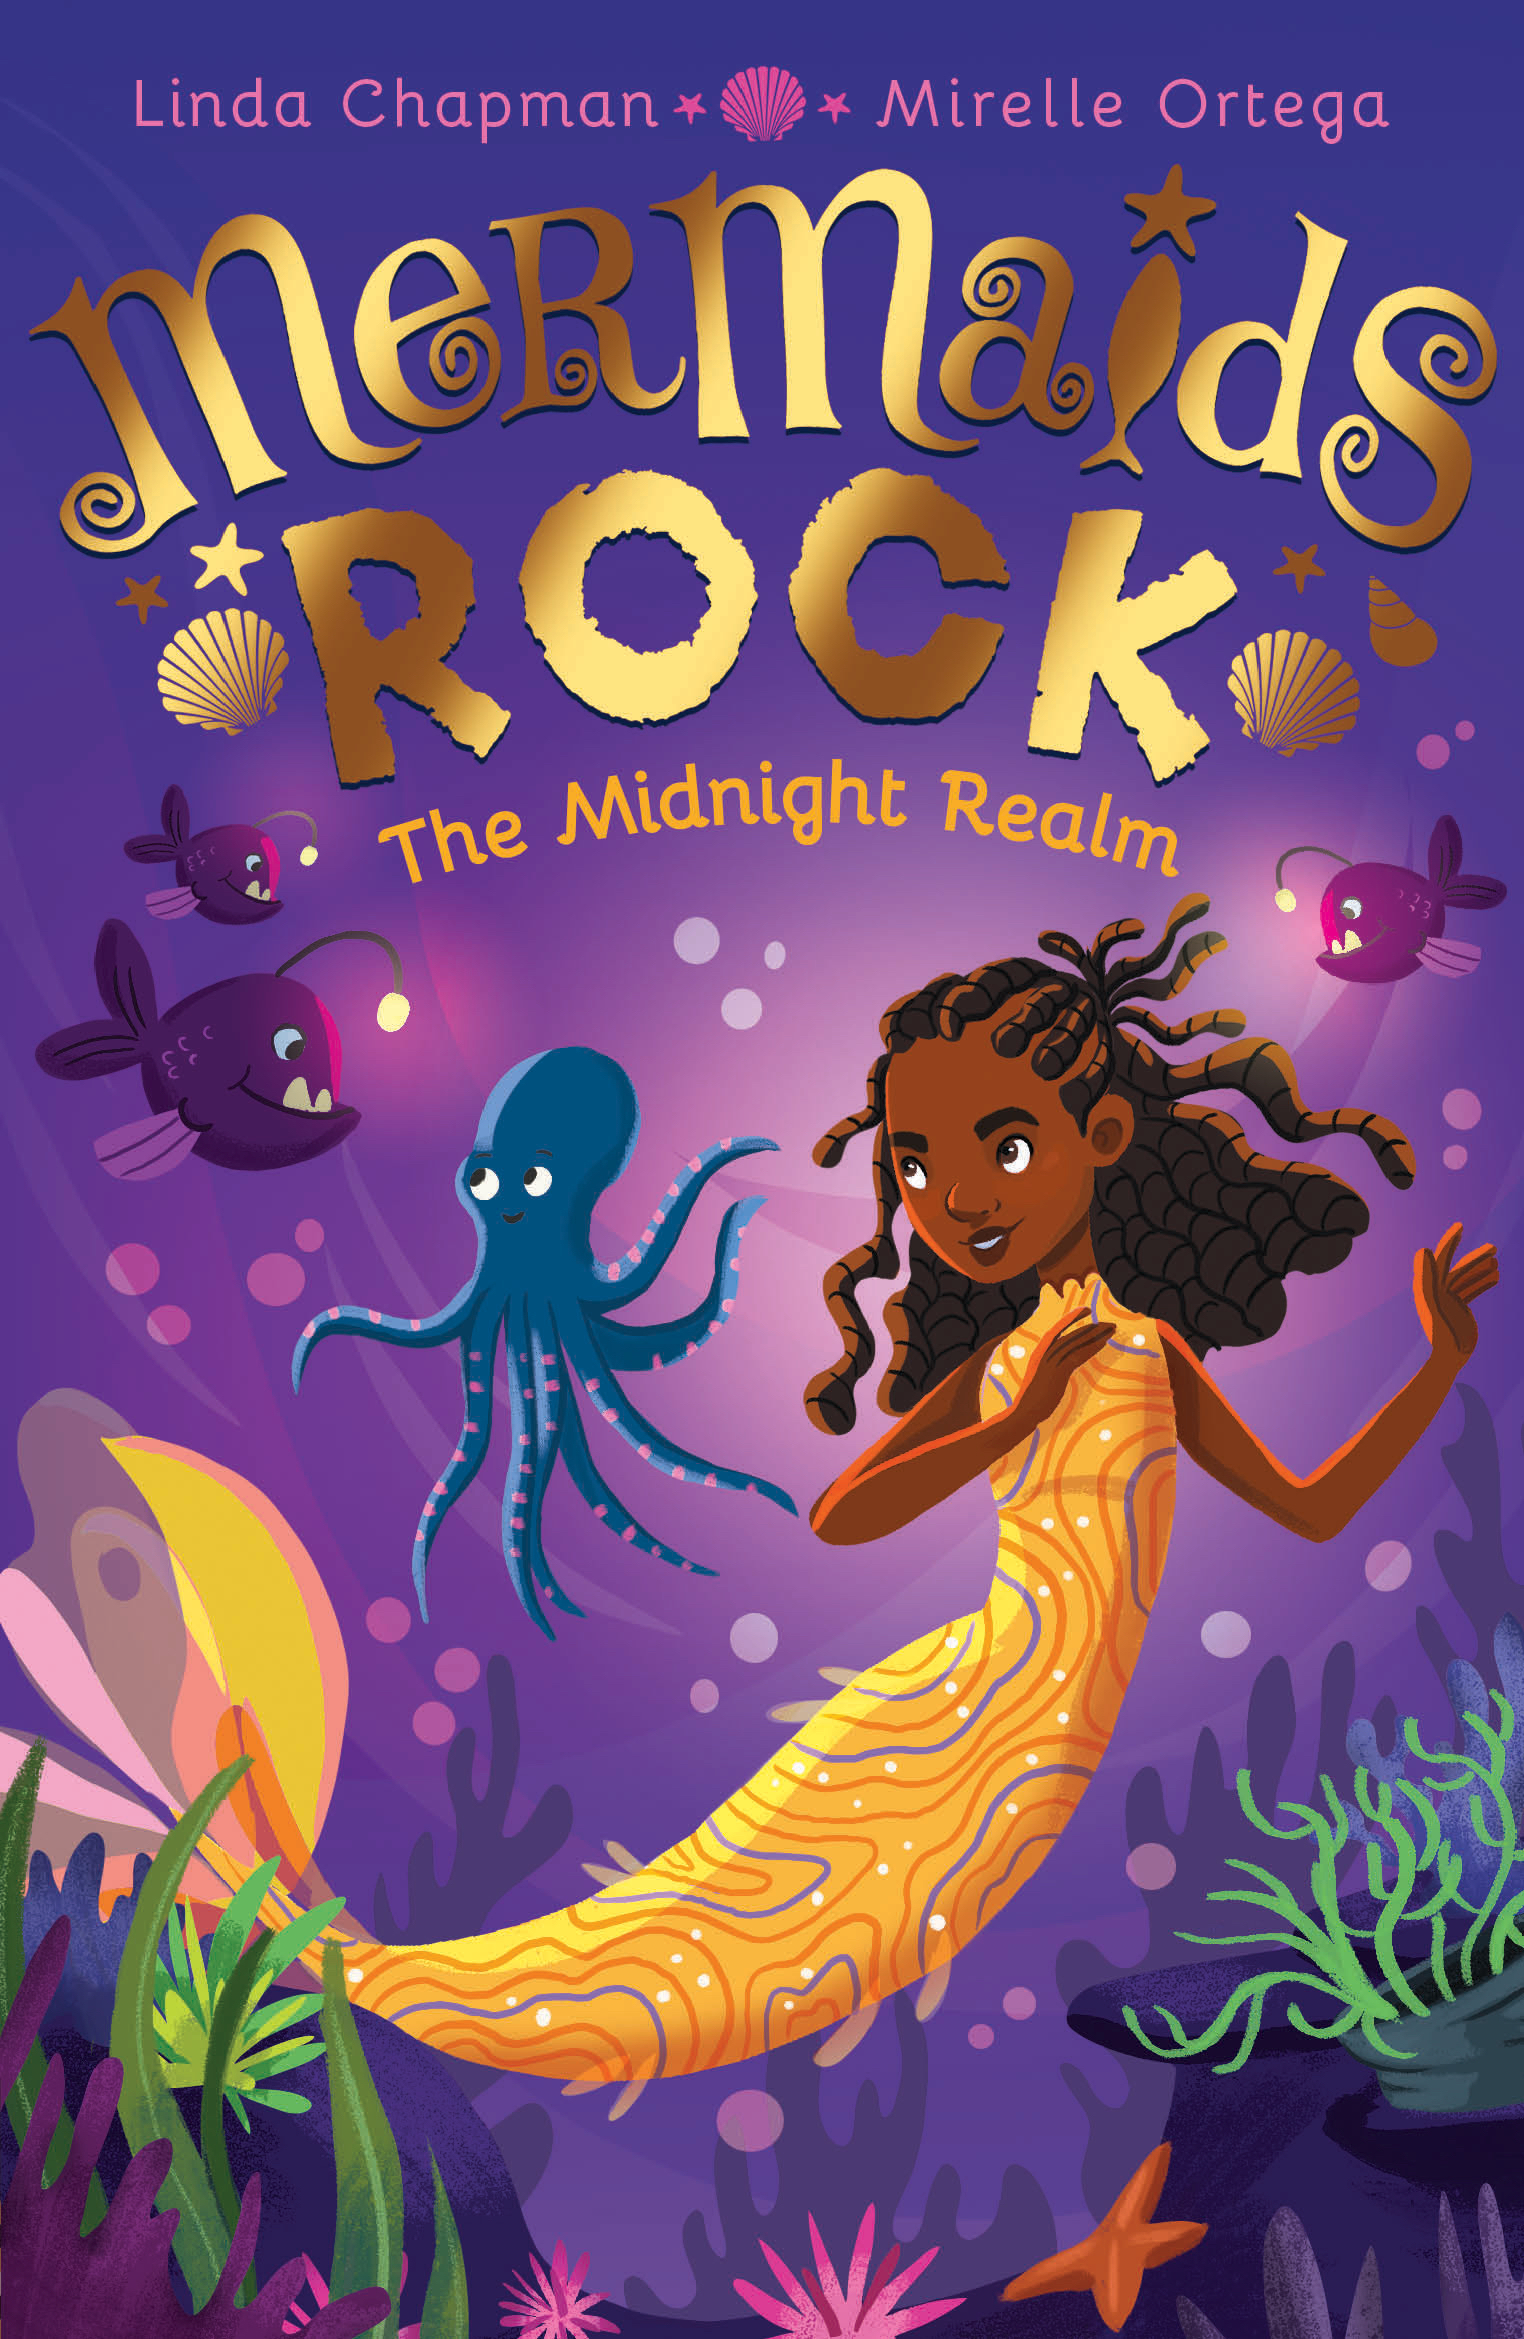 The Midnight Realm - Mermaids Rock